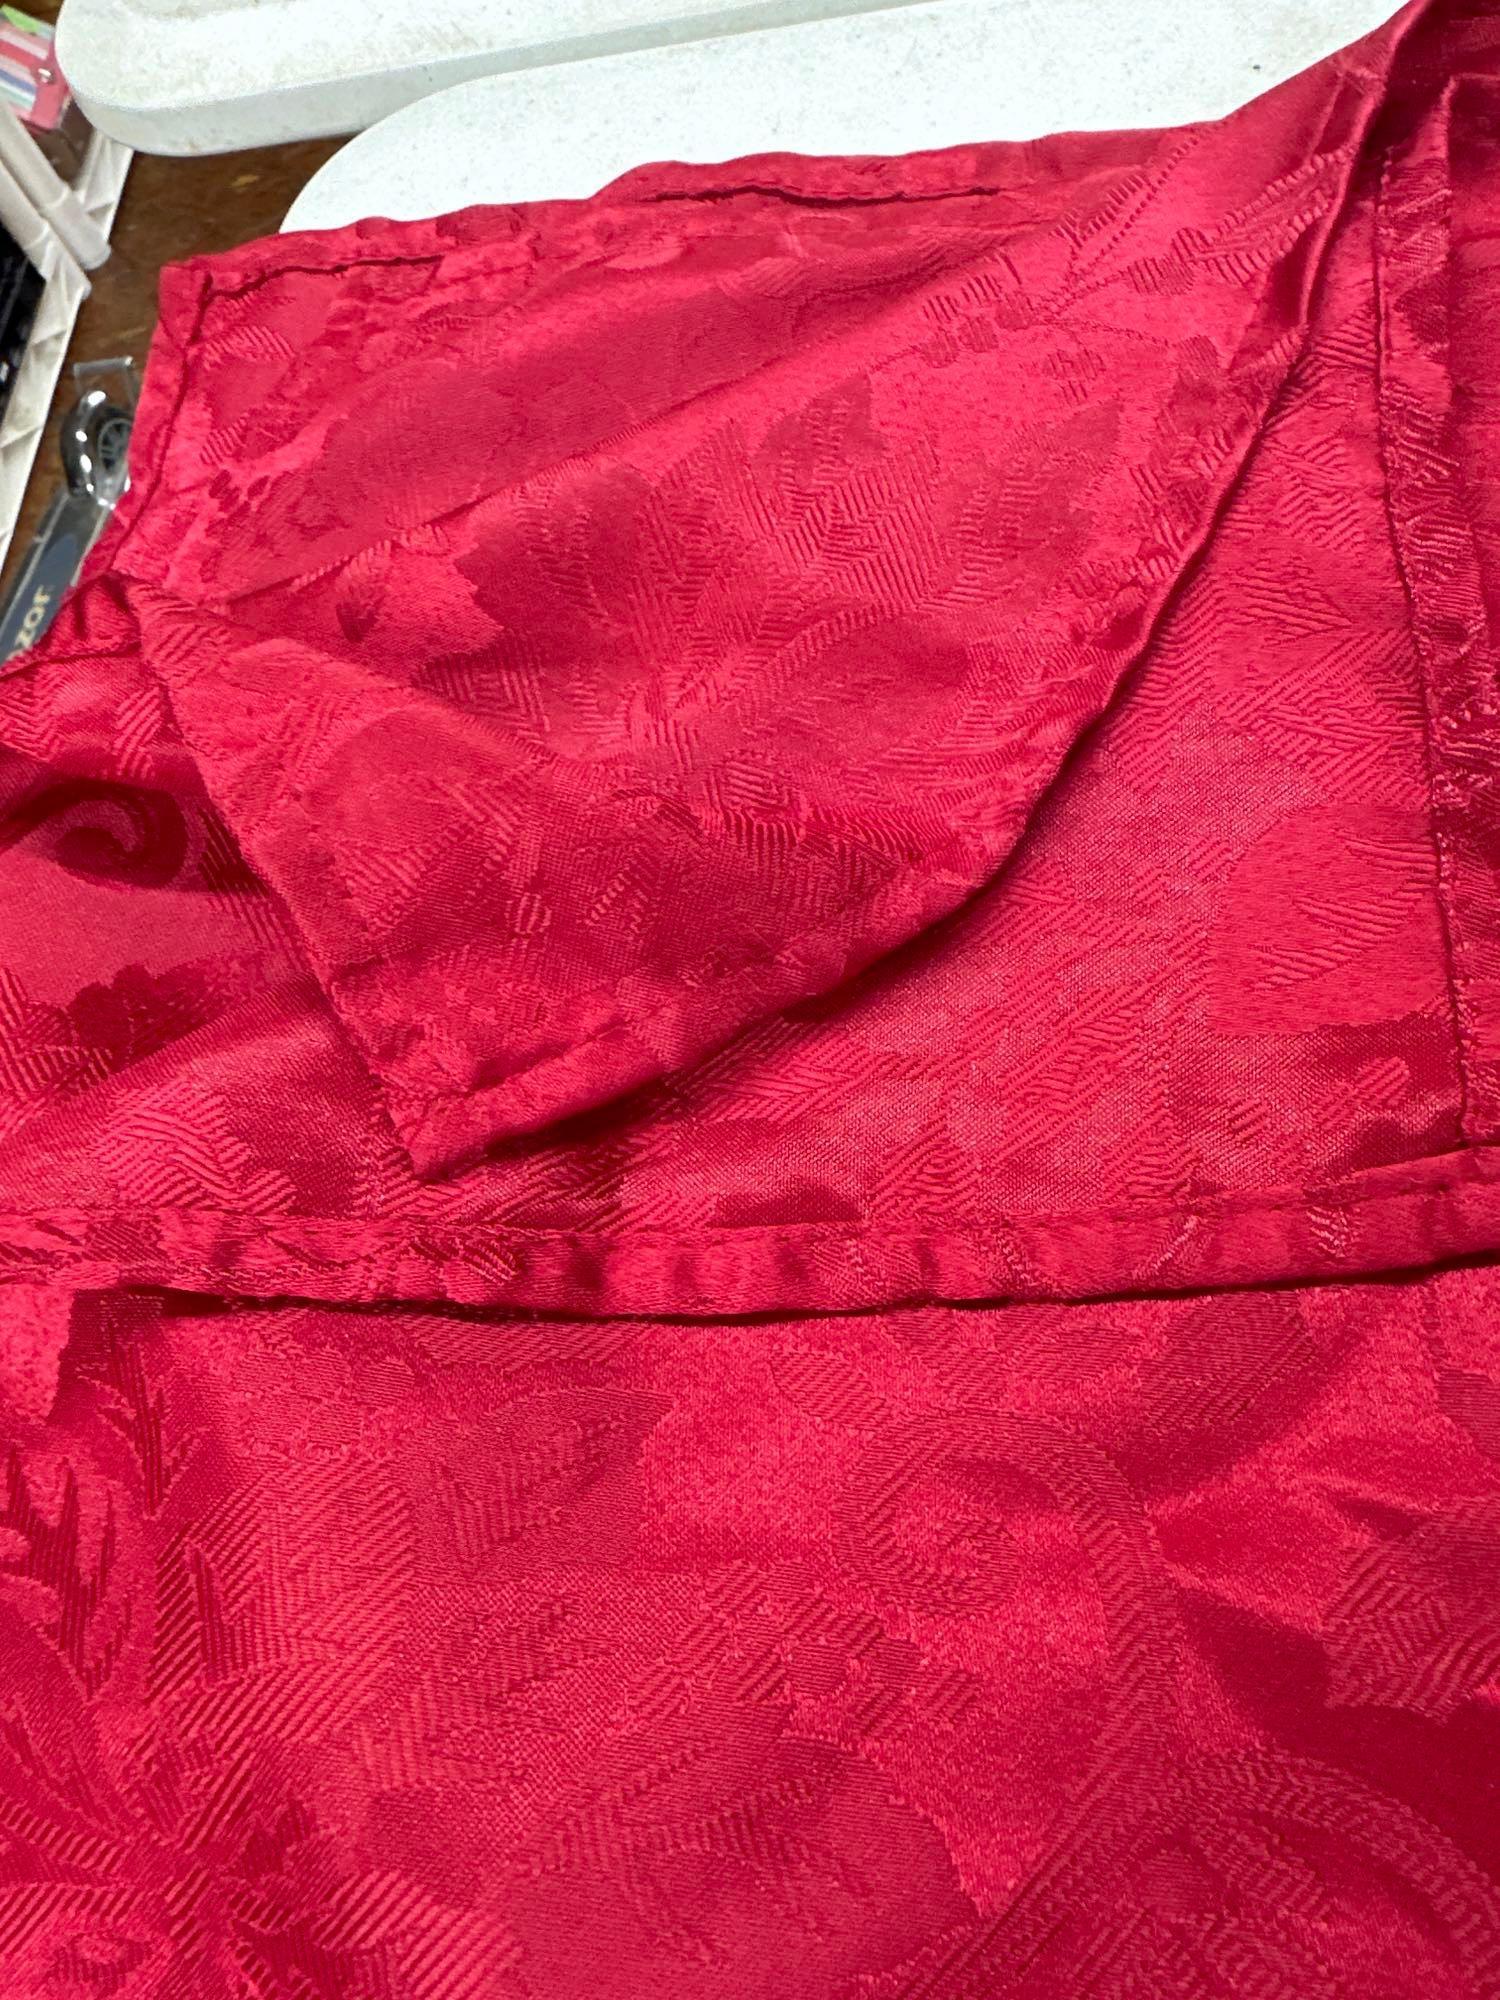 Christmas Cloth Red Tablecloth/ 6 Matching Napkins